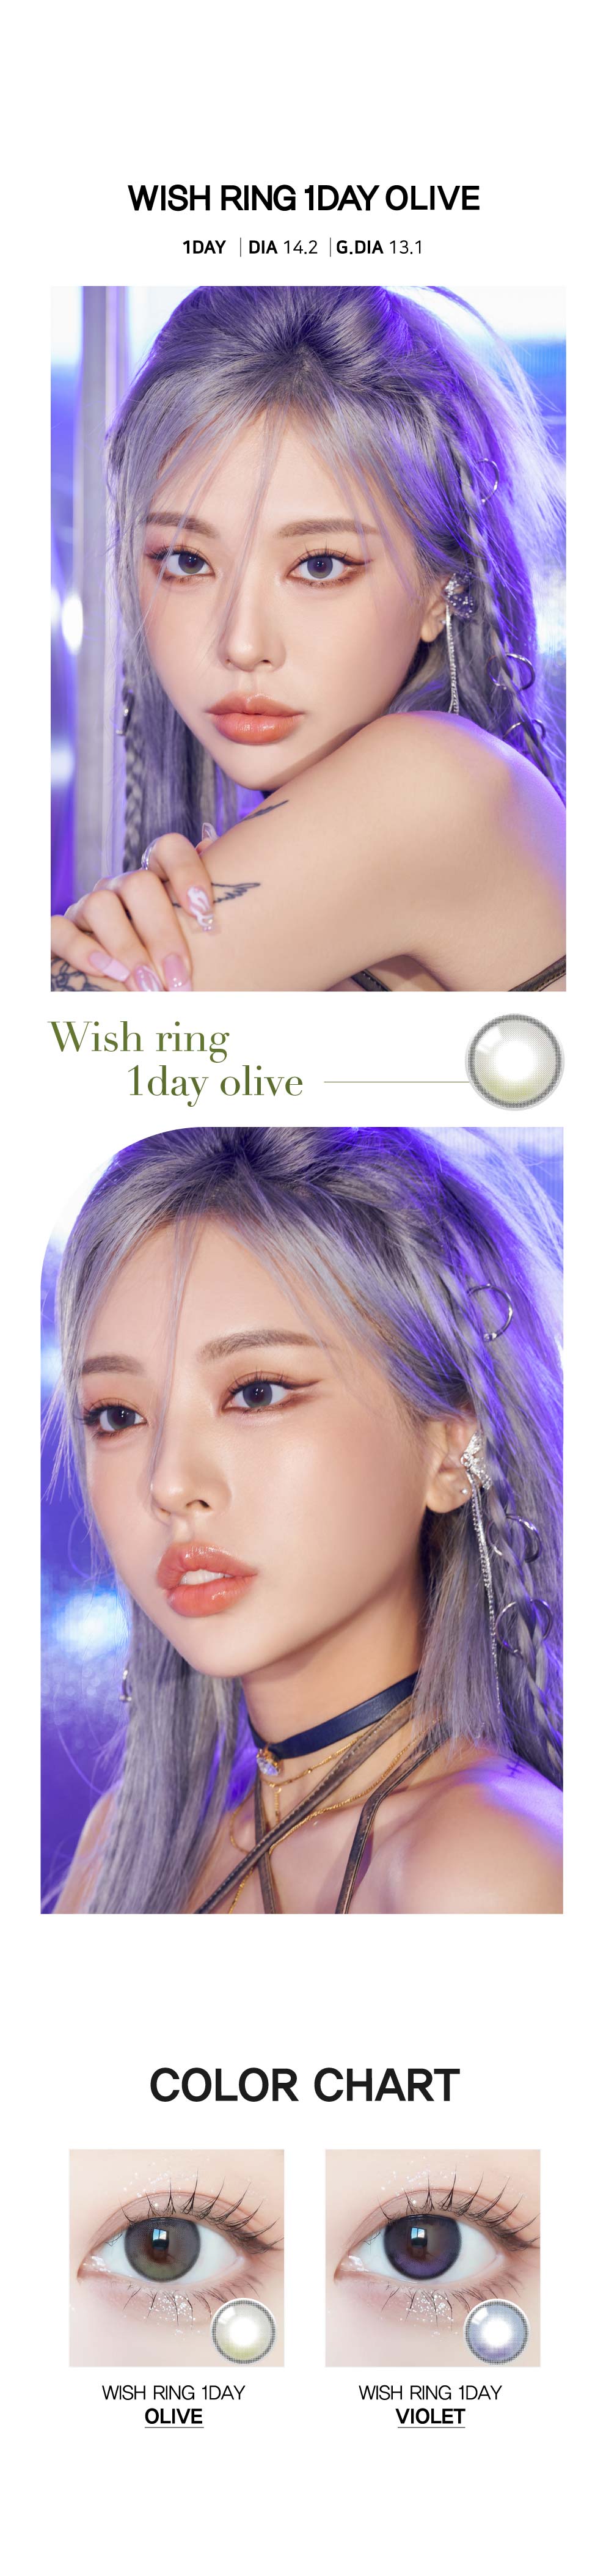 wish-ring-1day-olive-10p-3.jpg